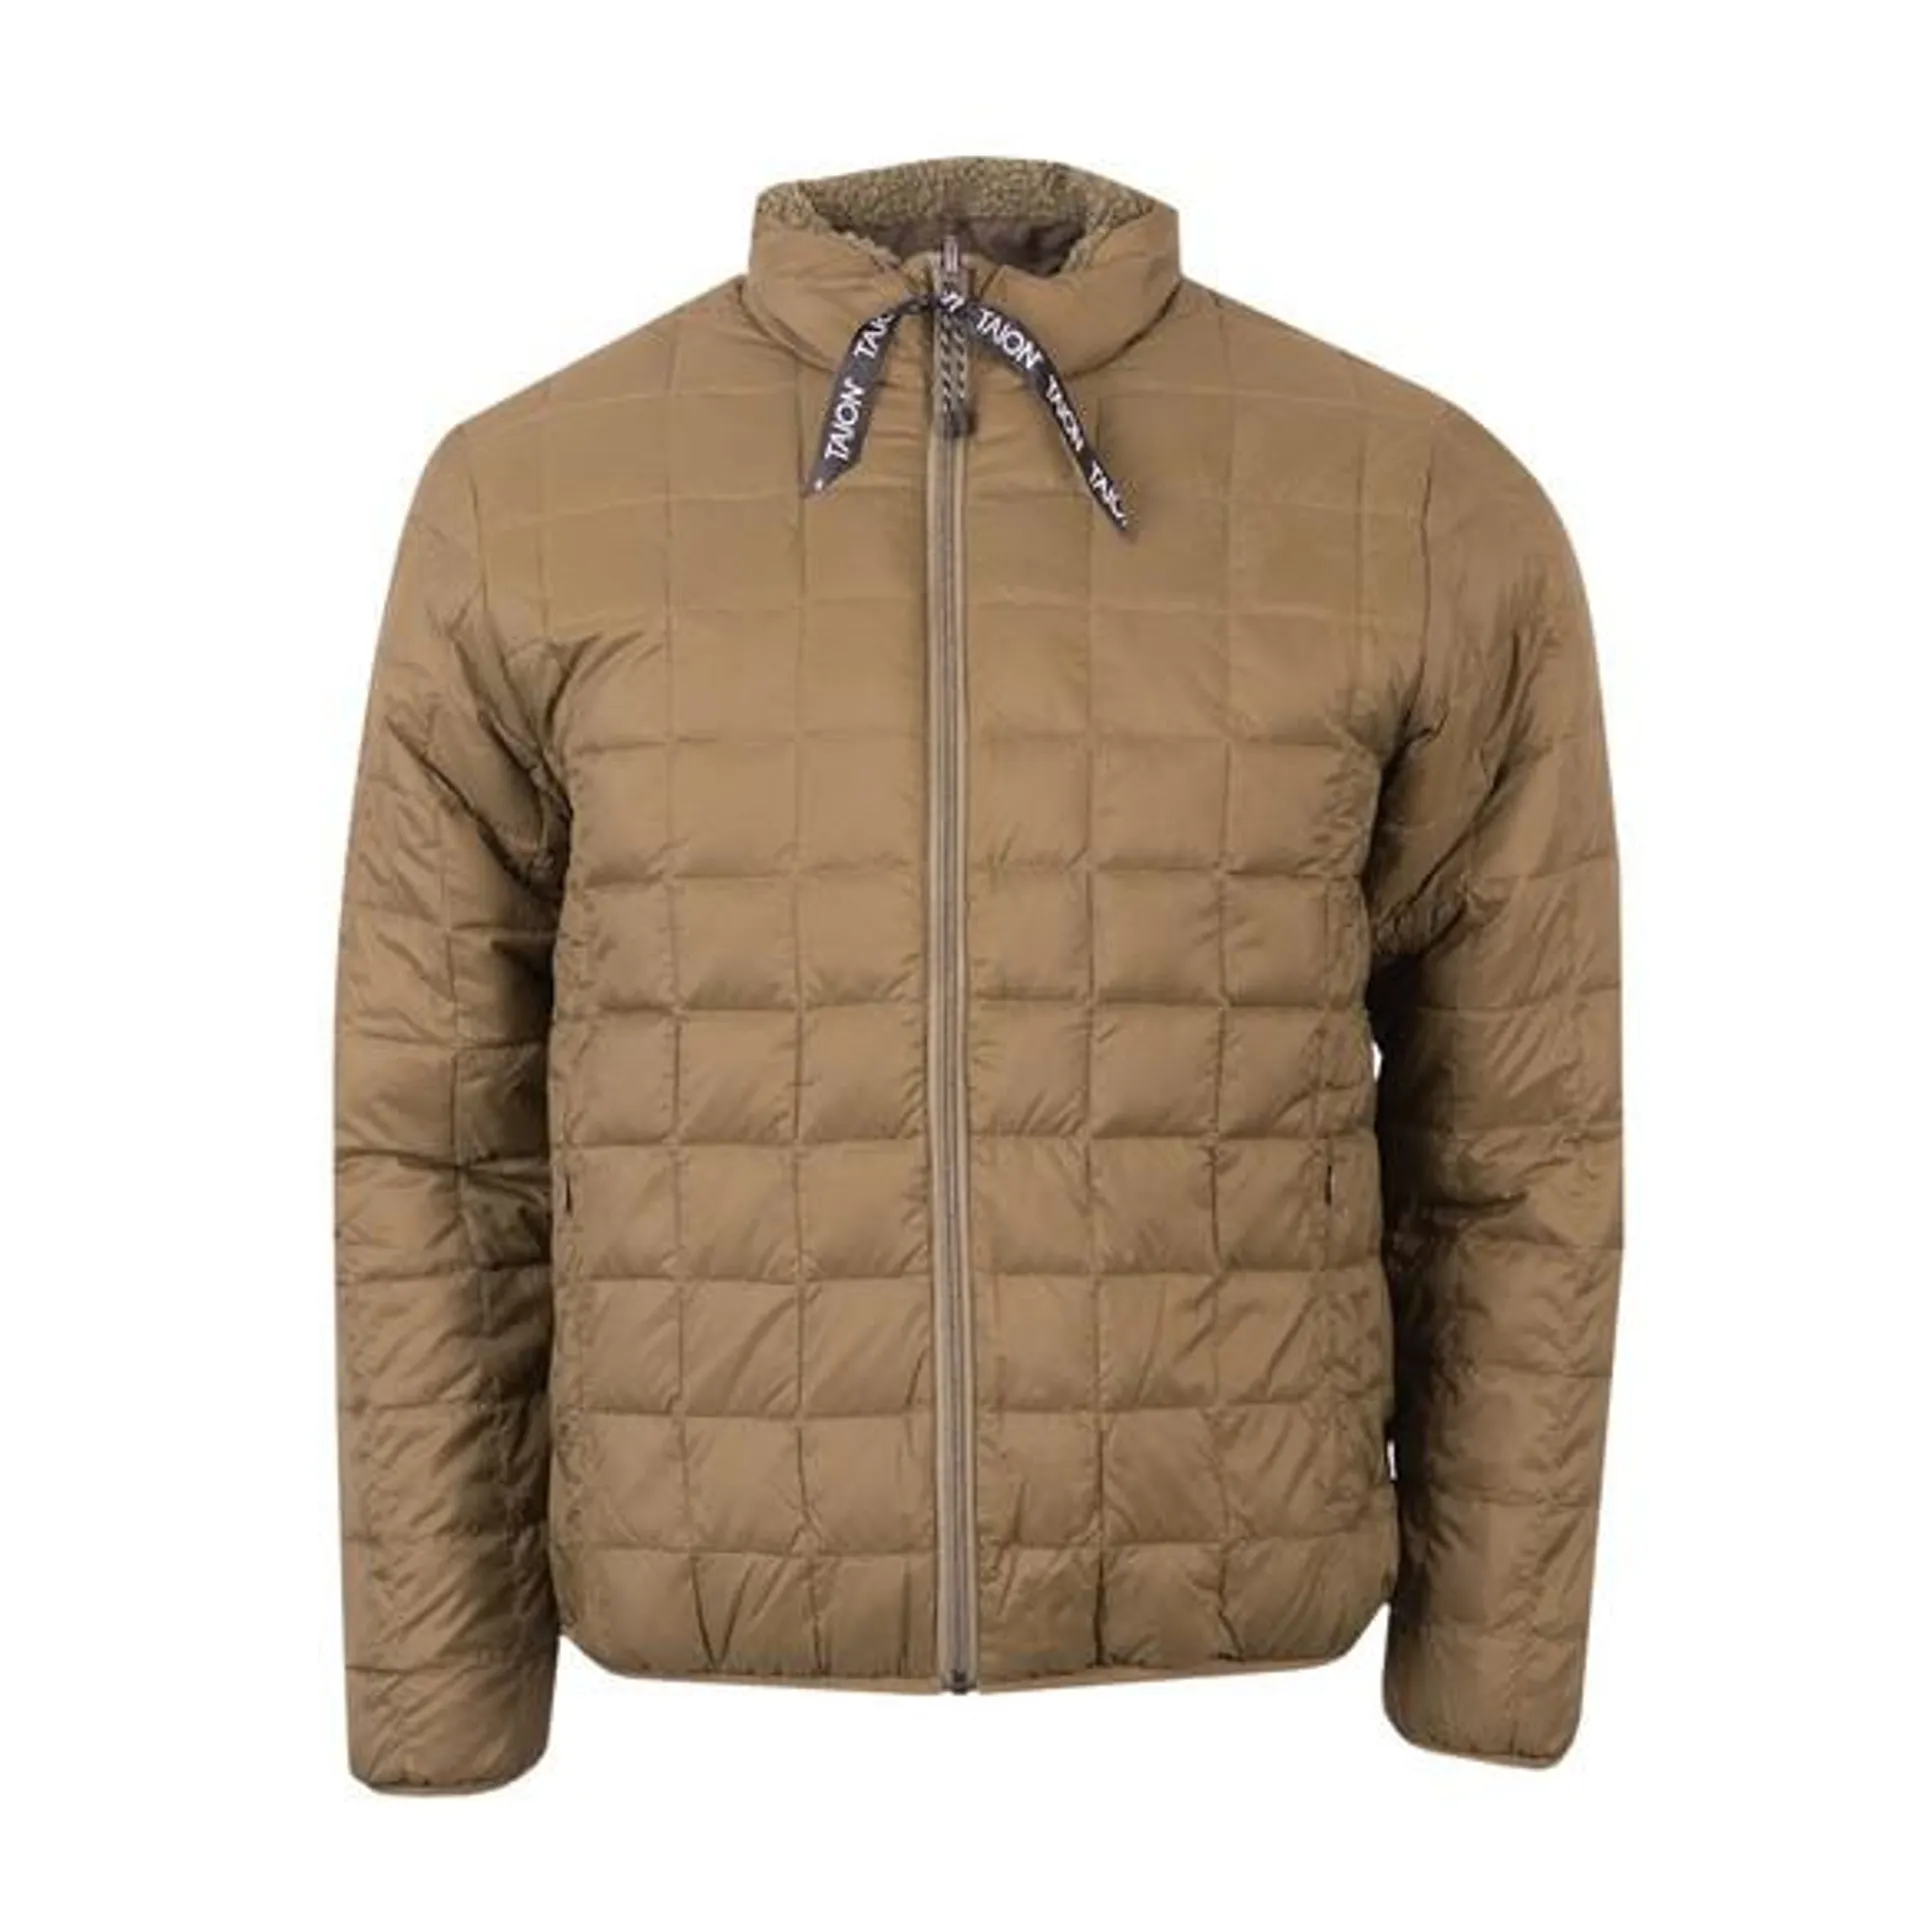 R102MB Fleece Lined Reversible Jacket